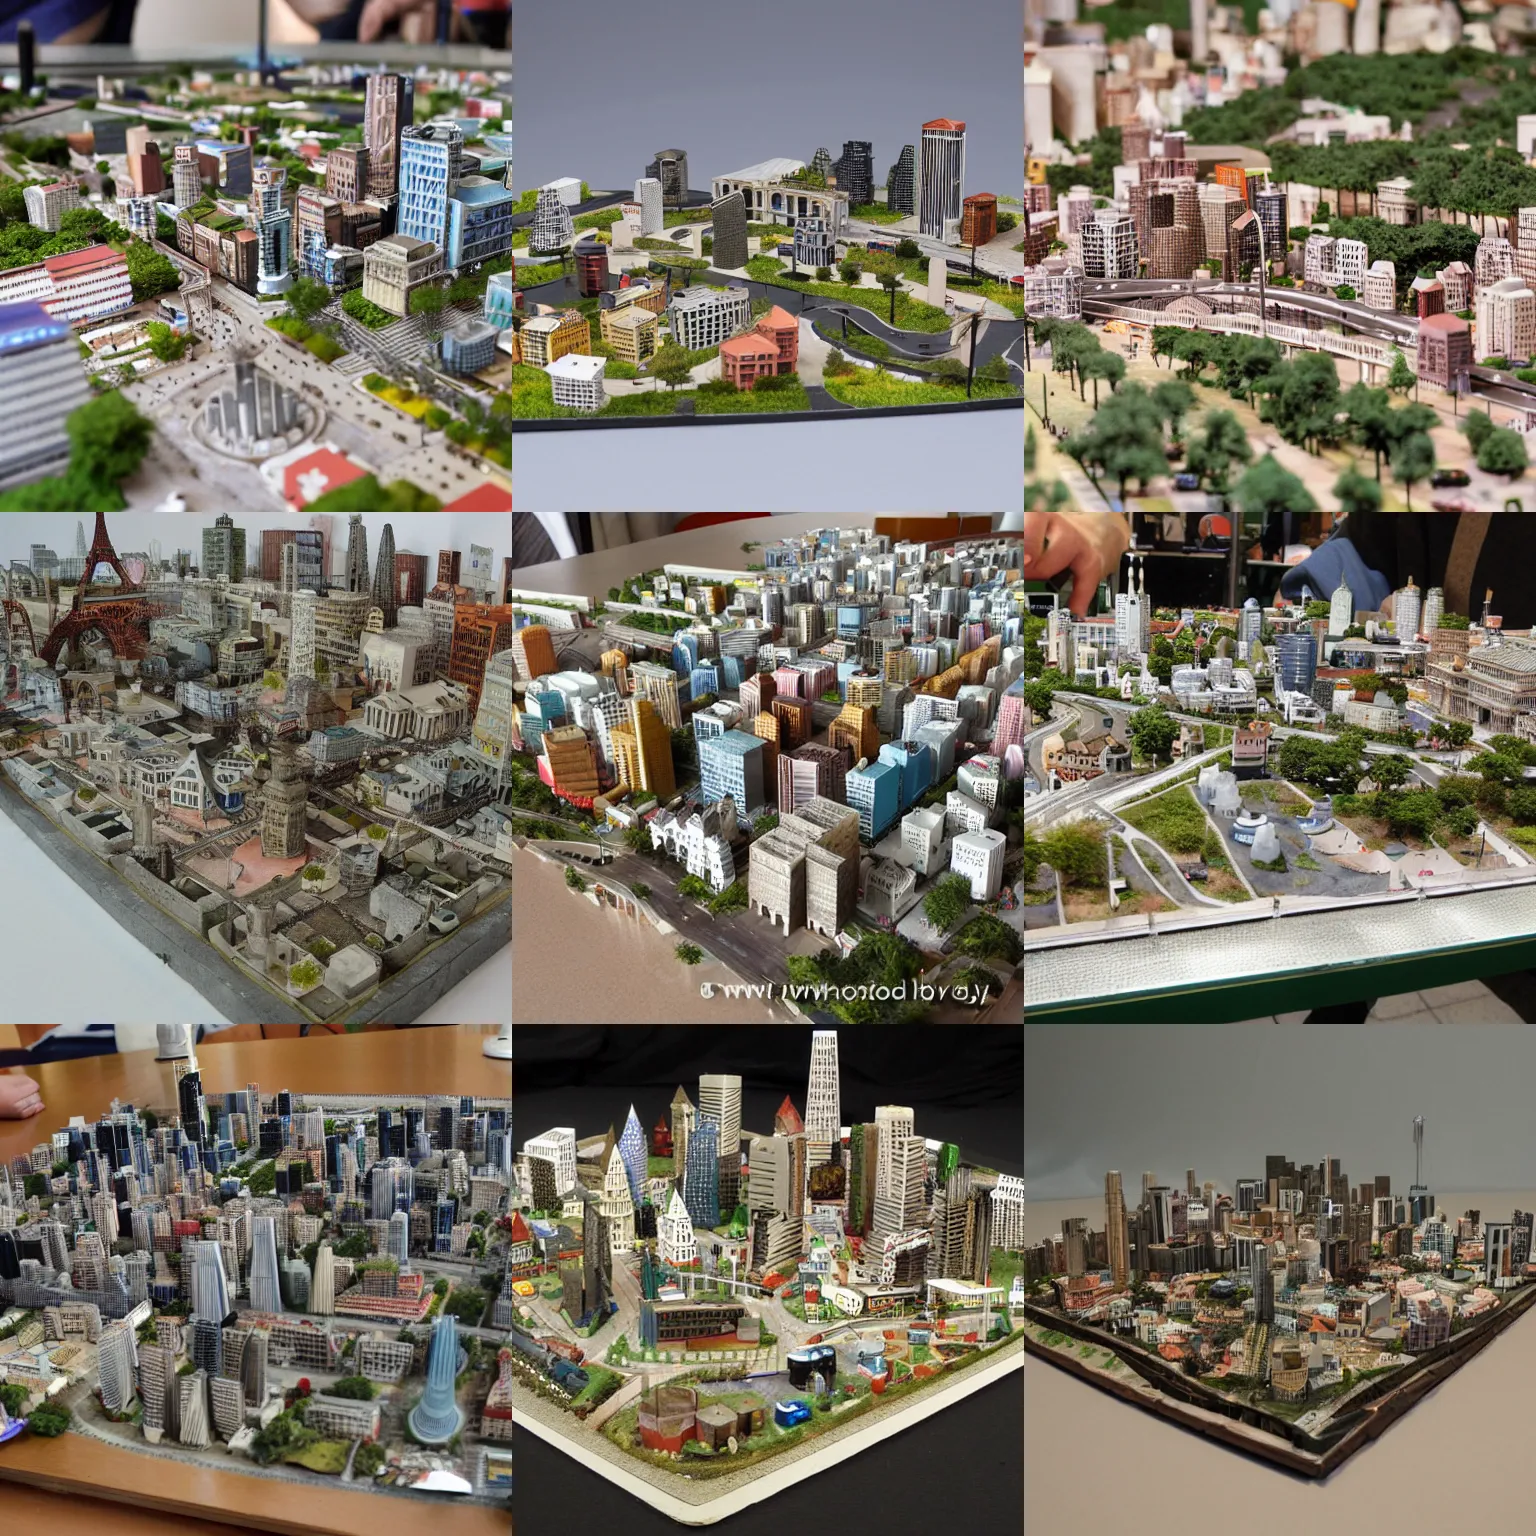 Prompt: miniature model of a city